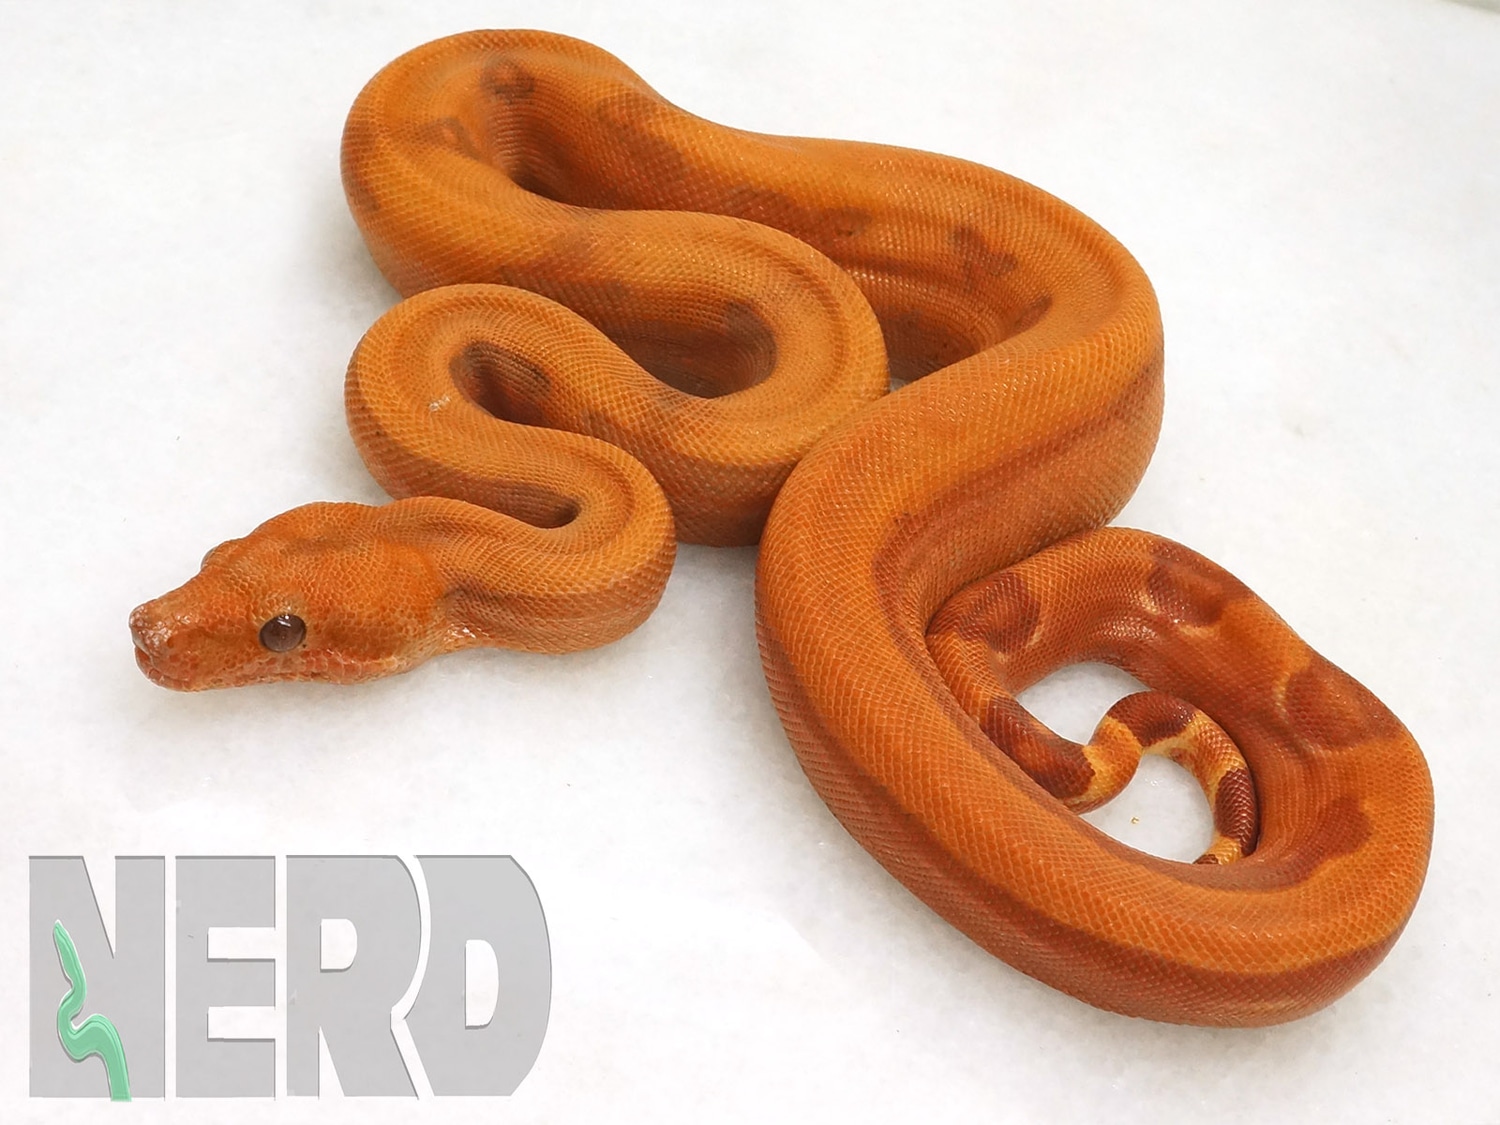 VPI Sunglow Blood Boa Boa Constrictor by New England Reptile Distributors